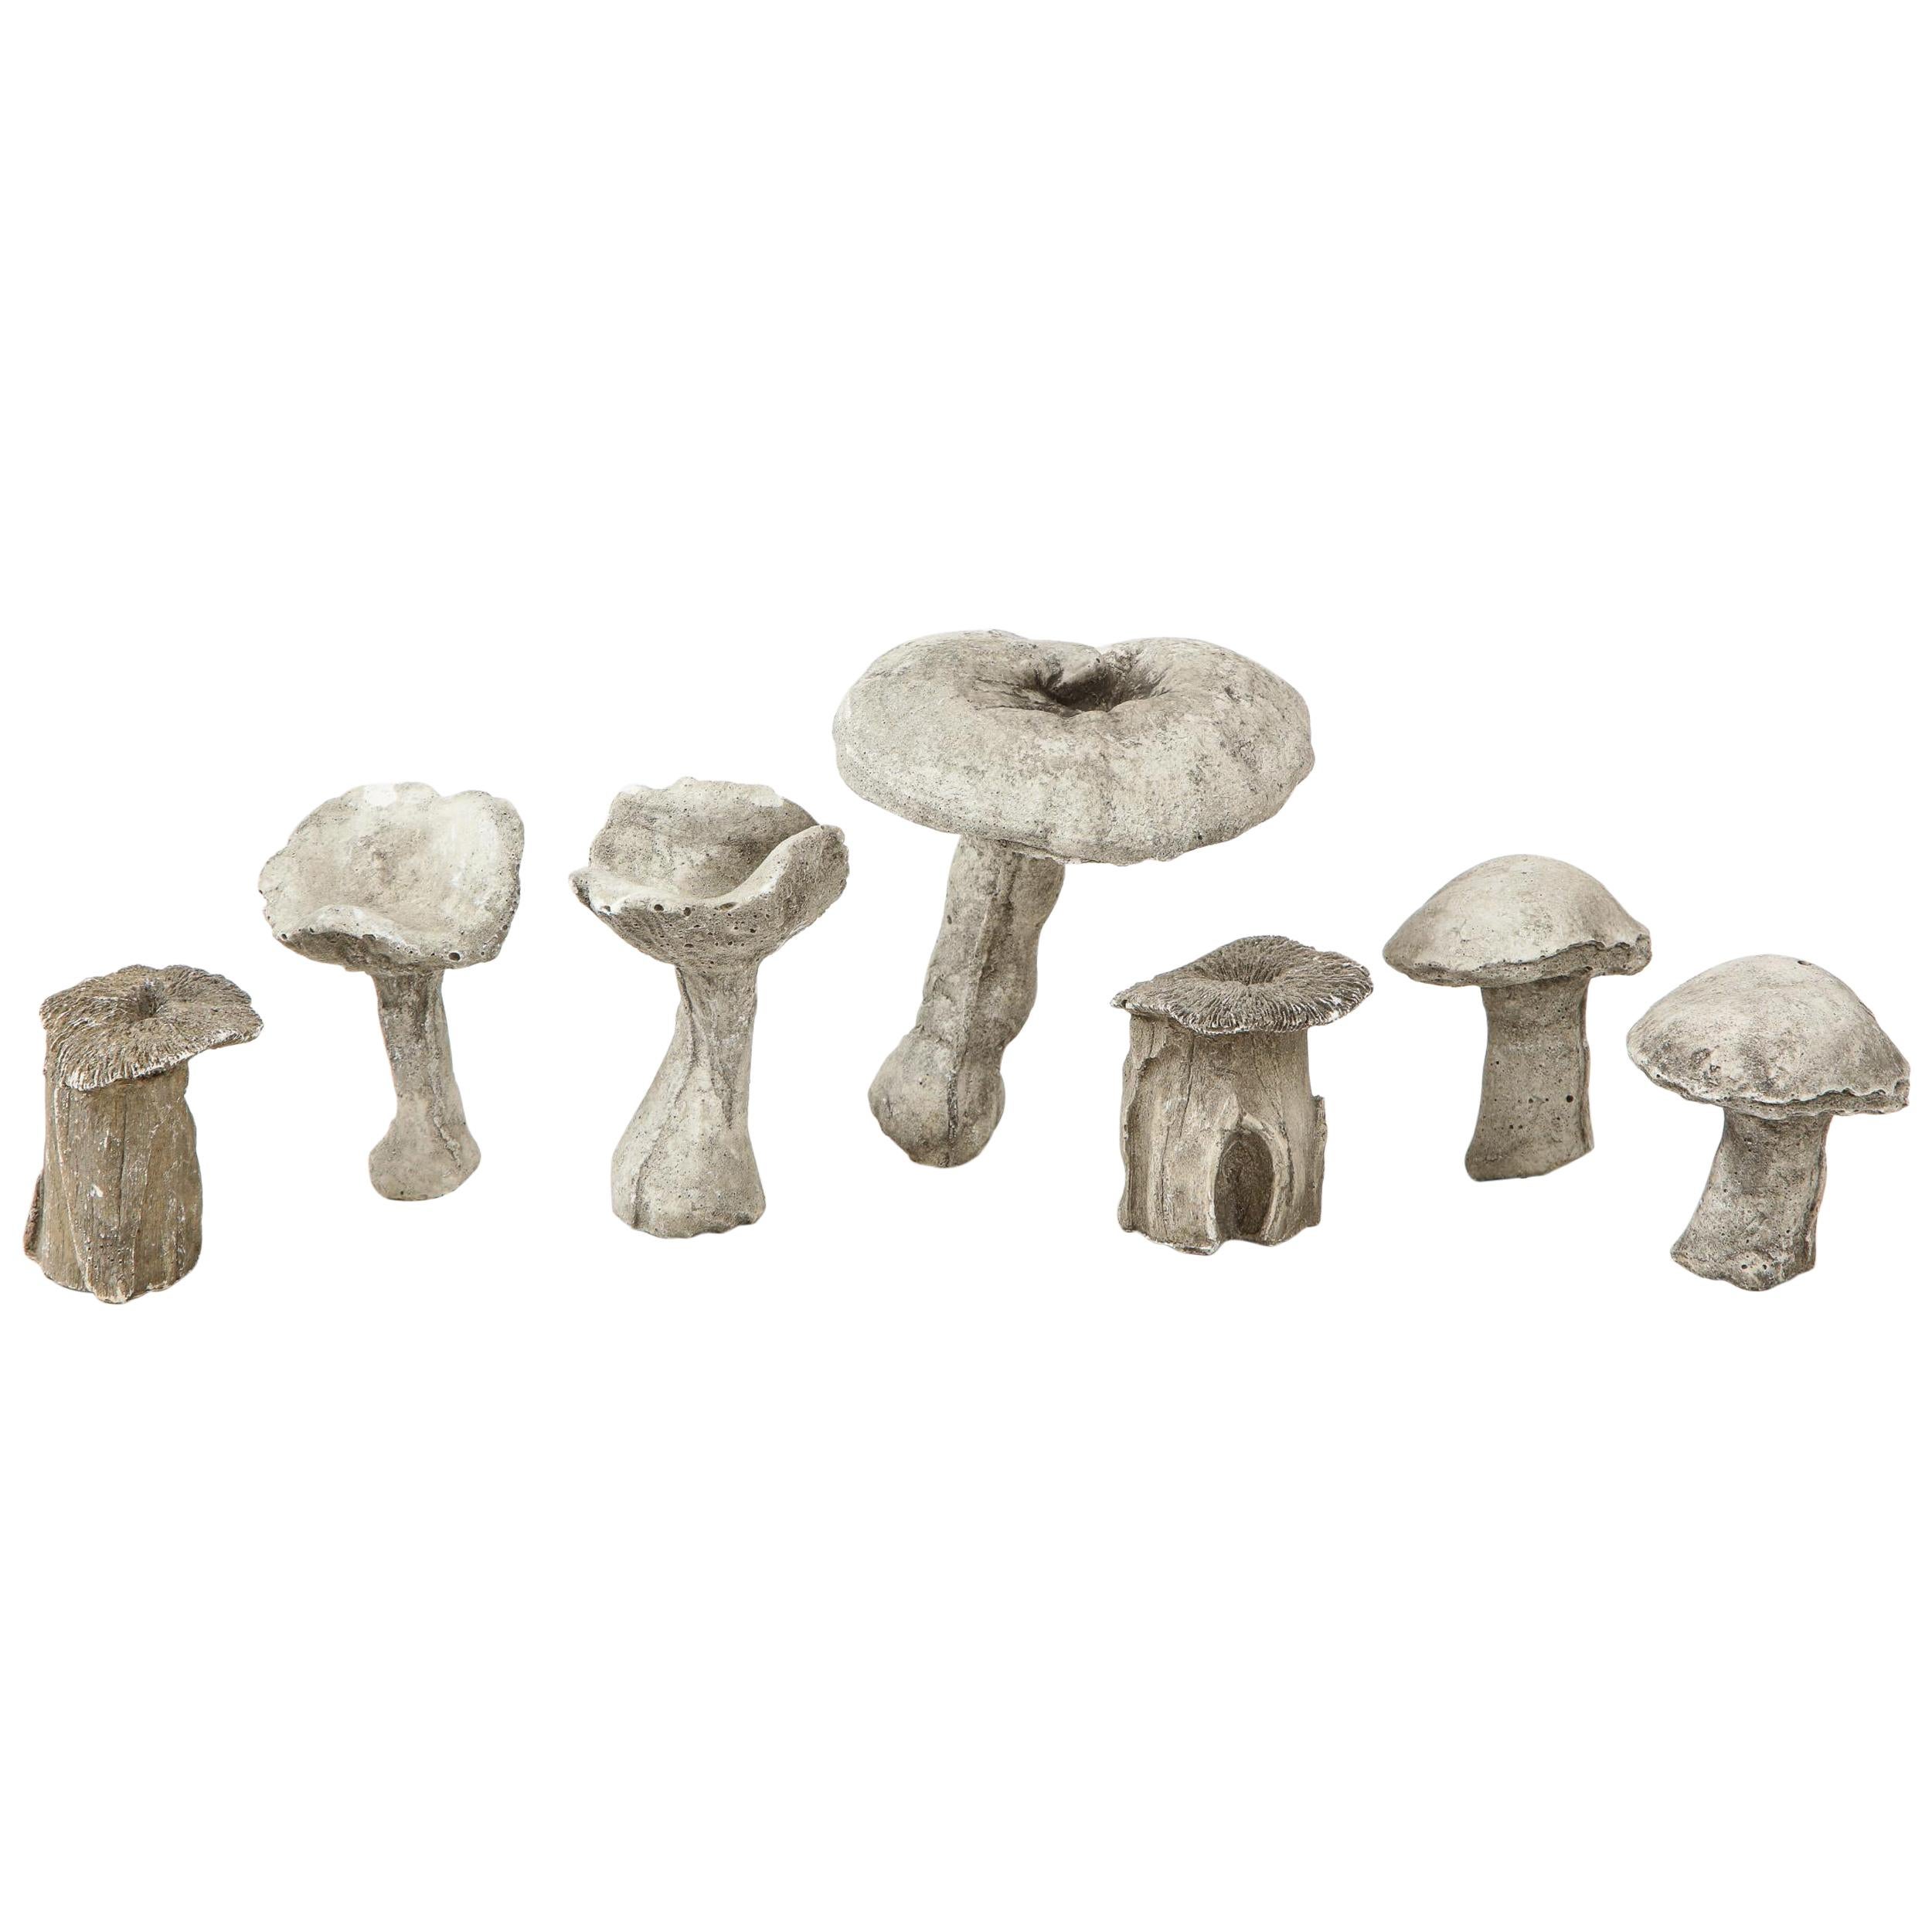 Vintage Set of Miniature Garden Mushrooms